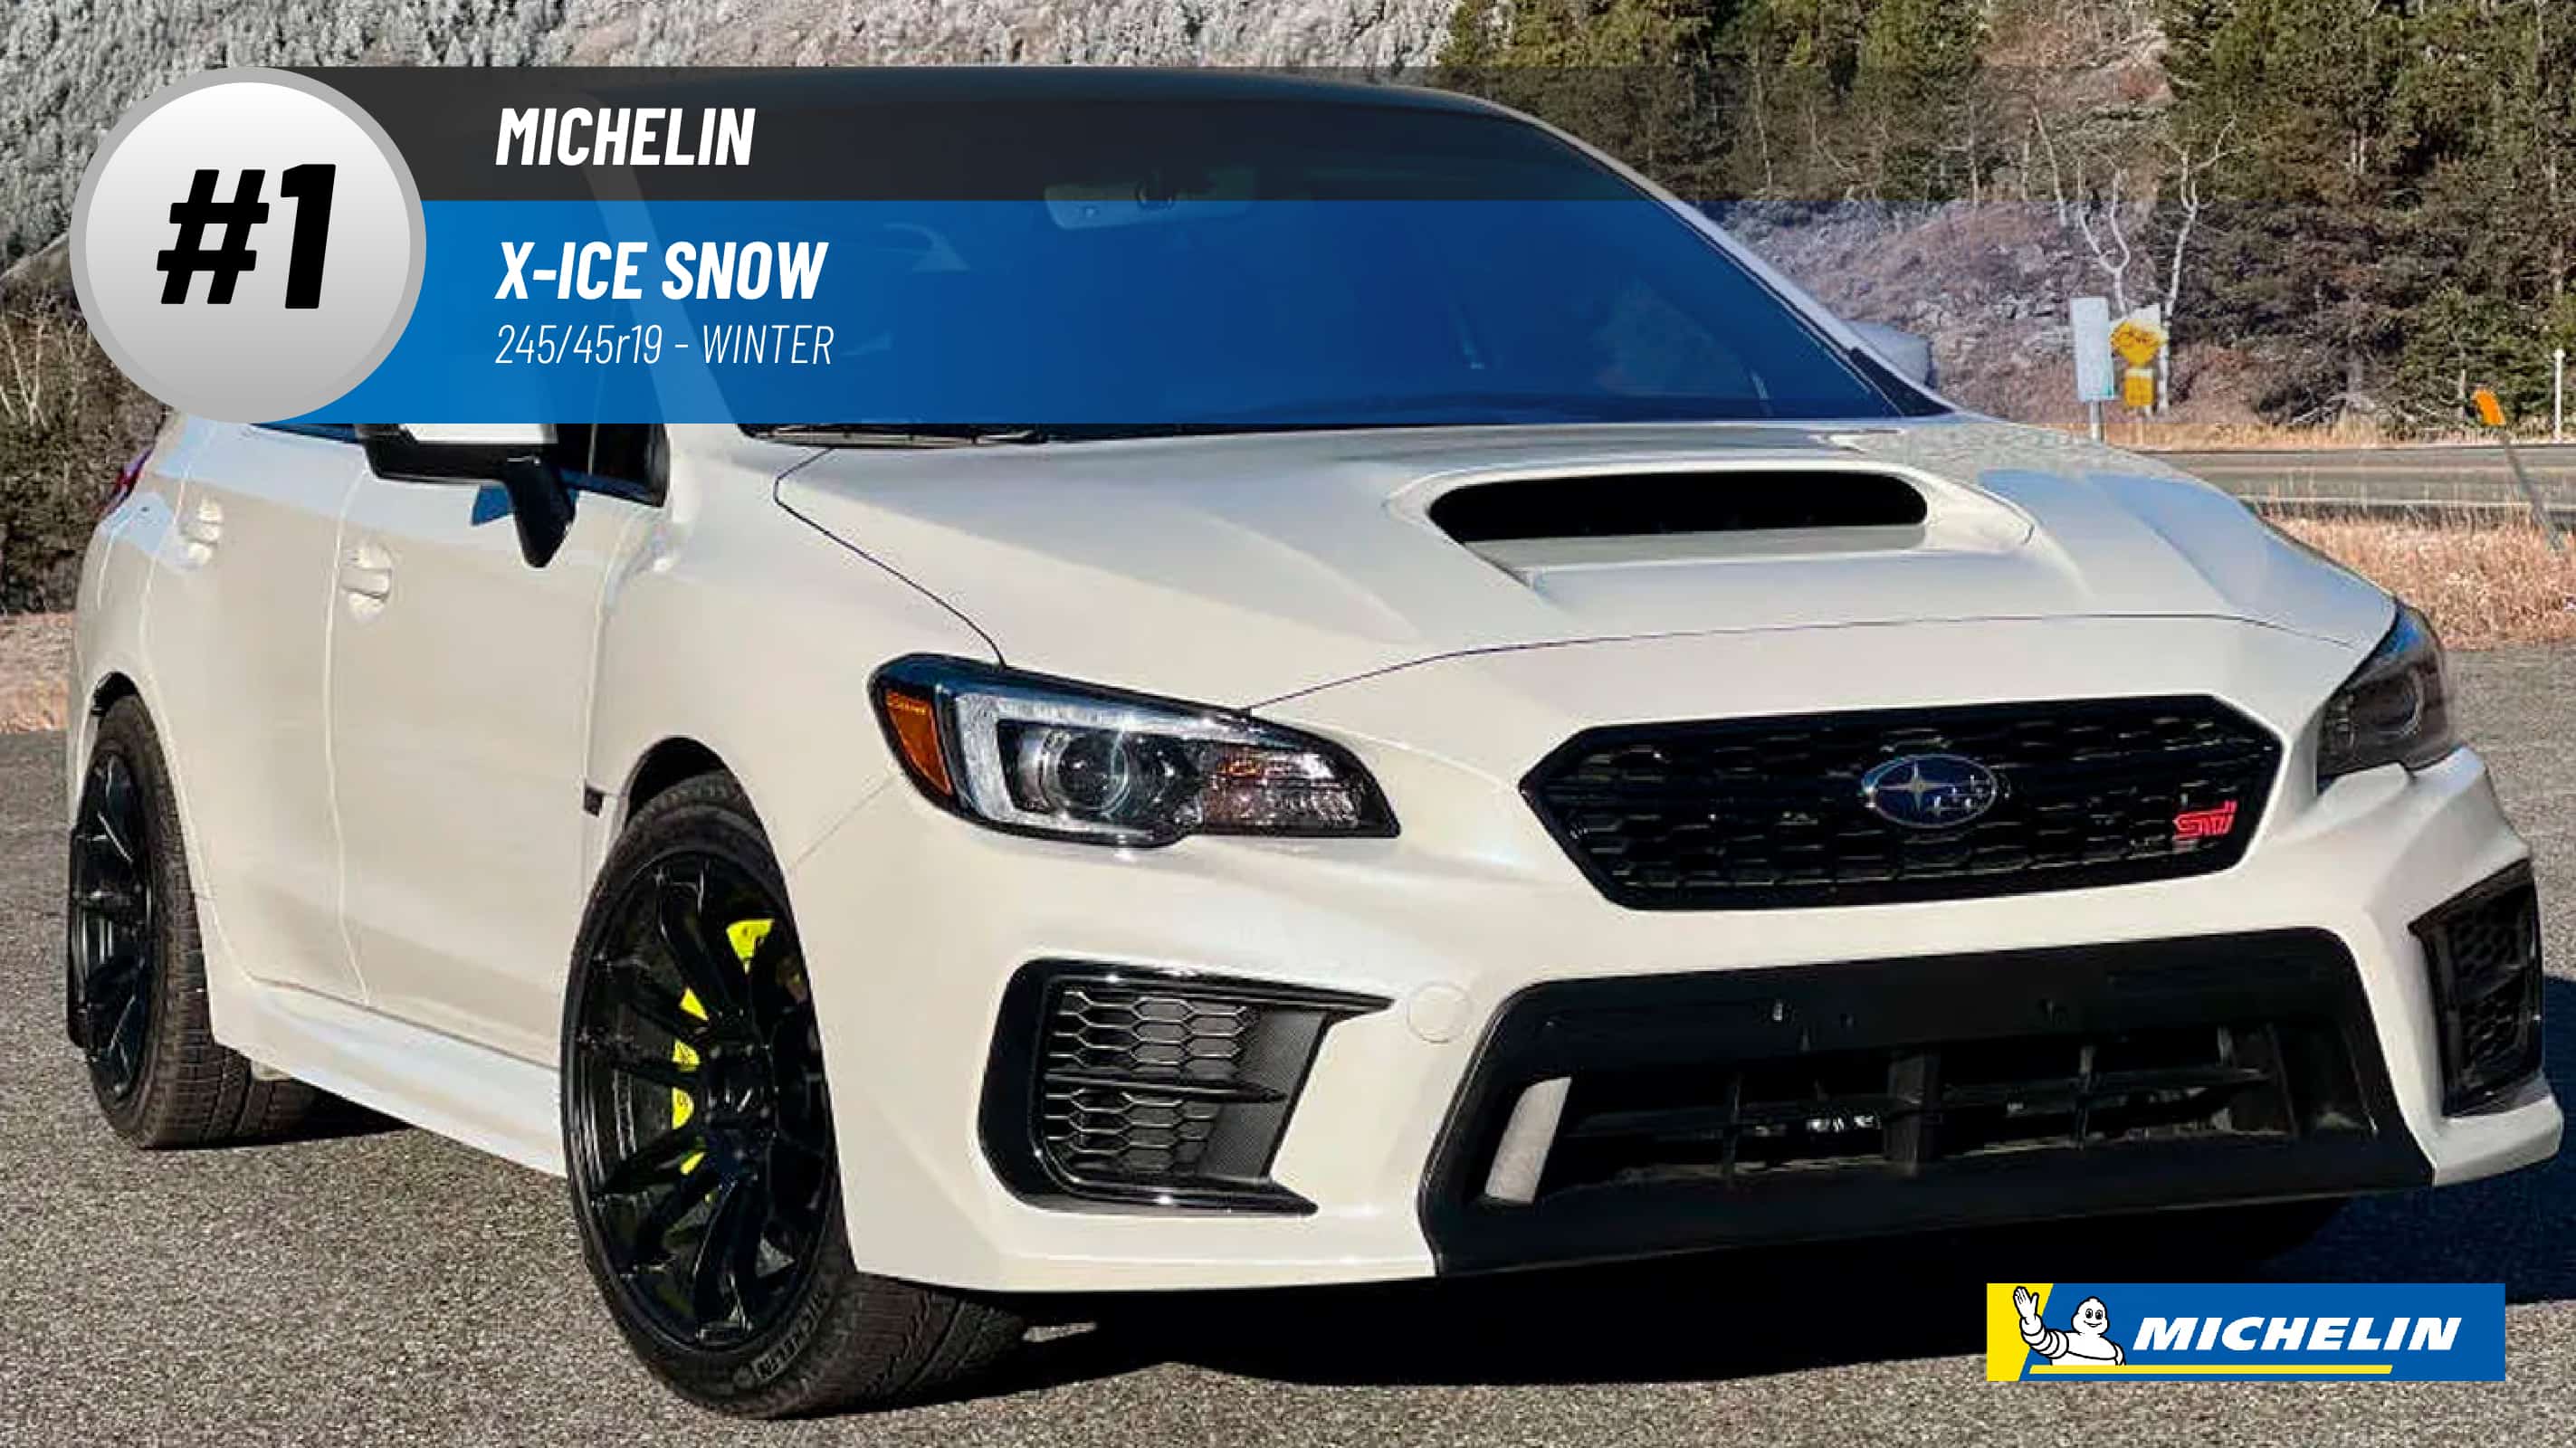 Top #3 Winter Tires: Michelin X-Ice Snow – 245/45r19